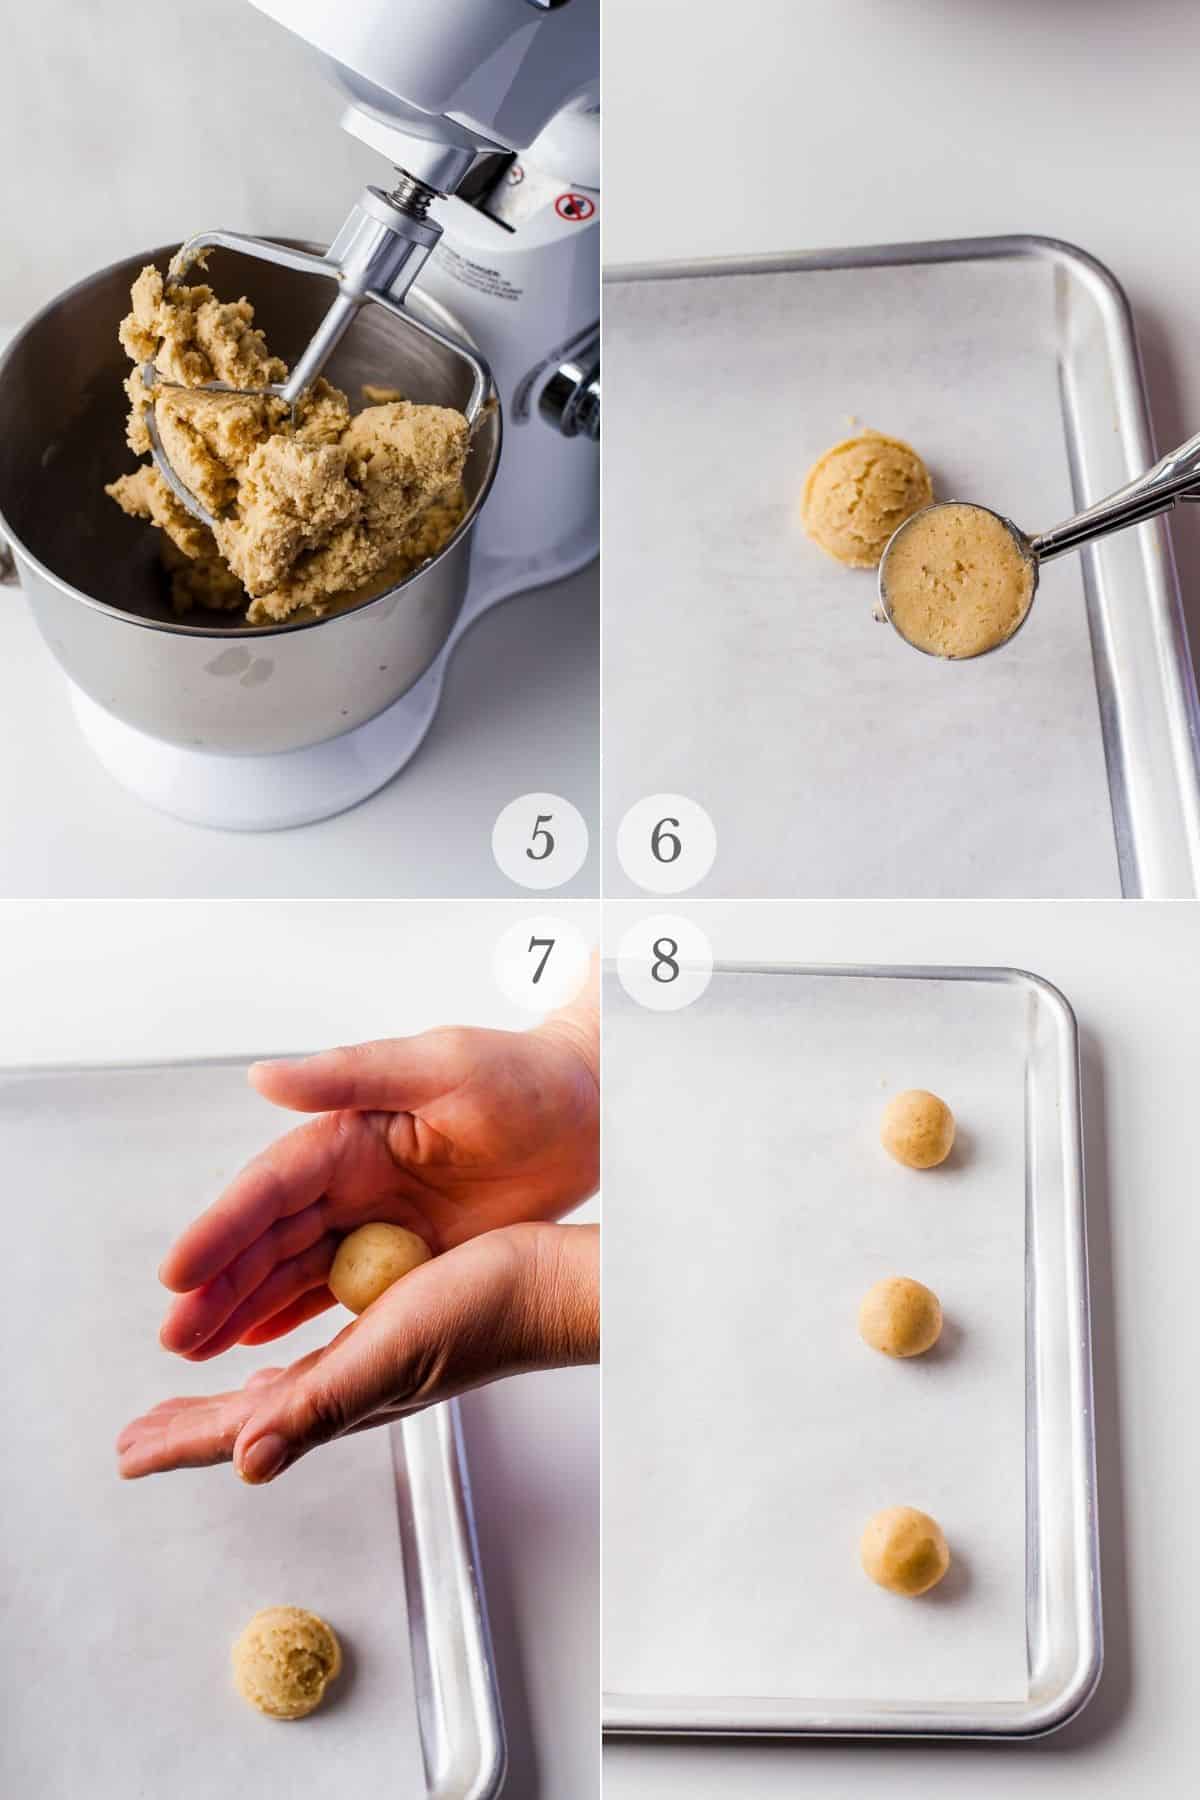 thumbprint cookies recipe steps 5-8